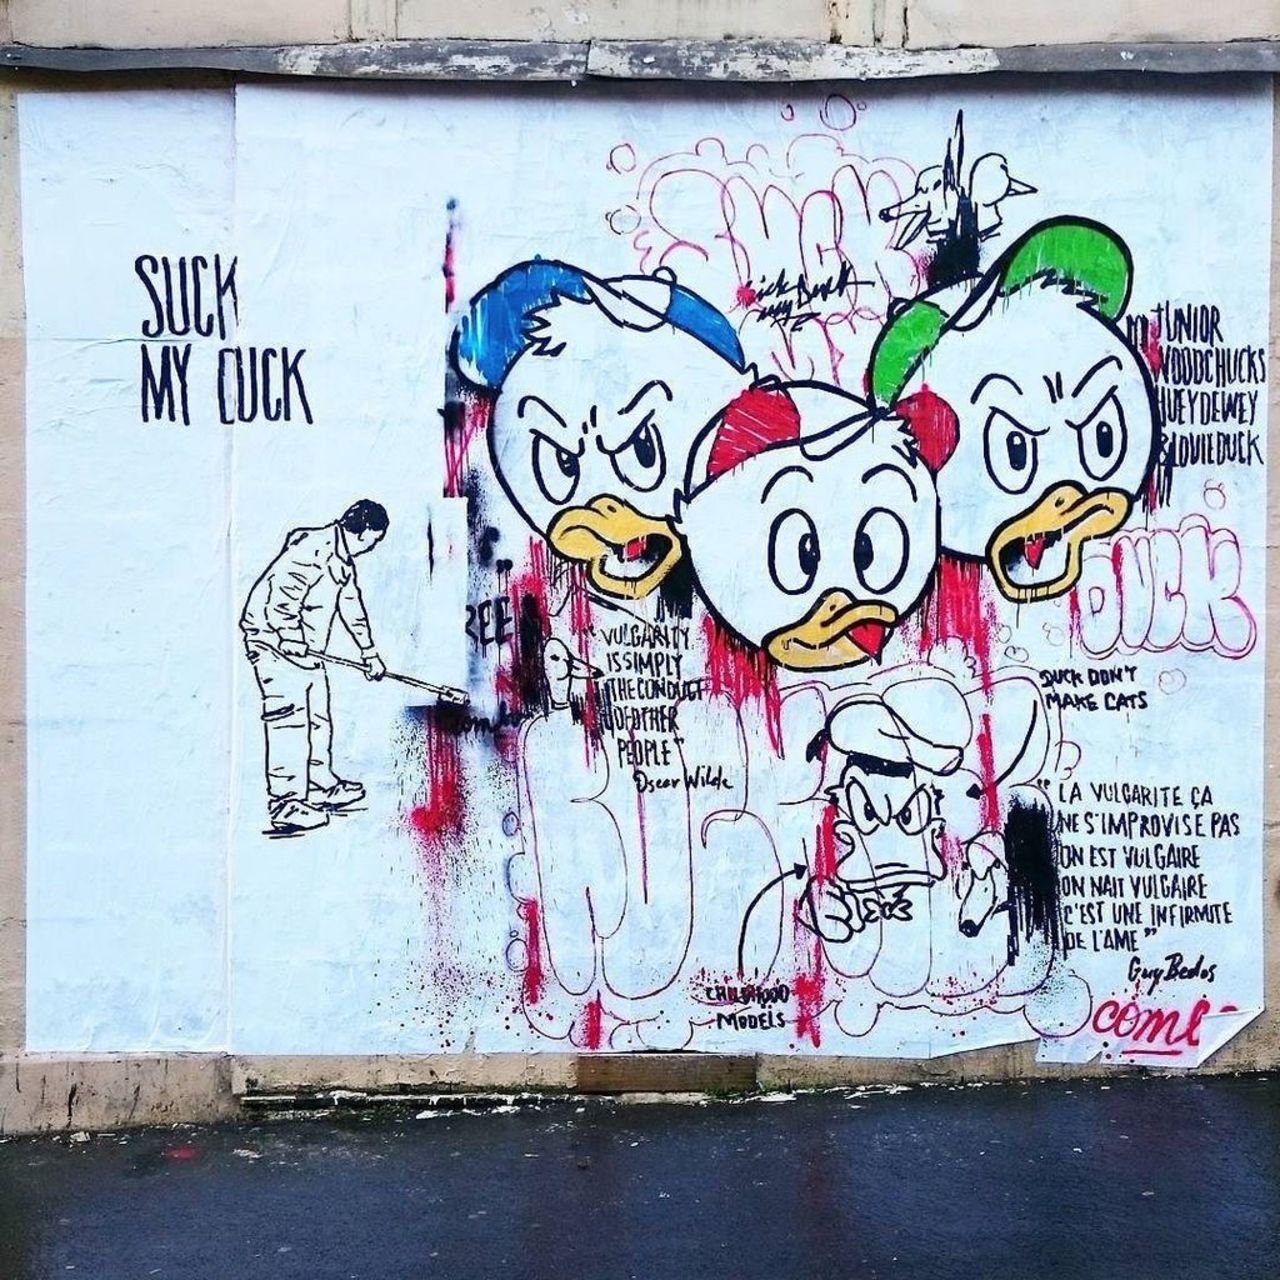 ● SUCK MY DUCK ●
#Quote #streetart #spraypaint #stencils #painting #pastup #graffiti #urbanart #artist #combo #comb… https://t.co/kUTuistSAY